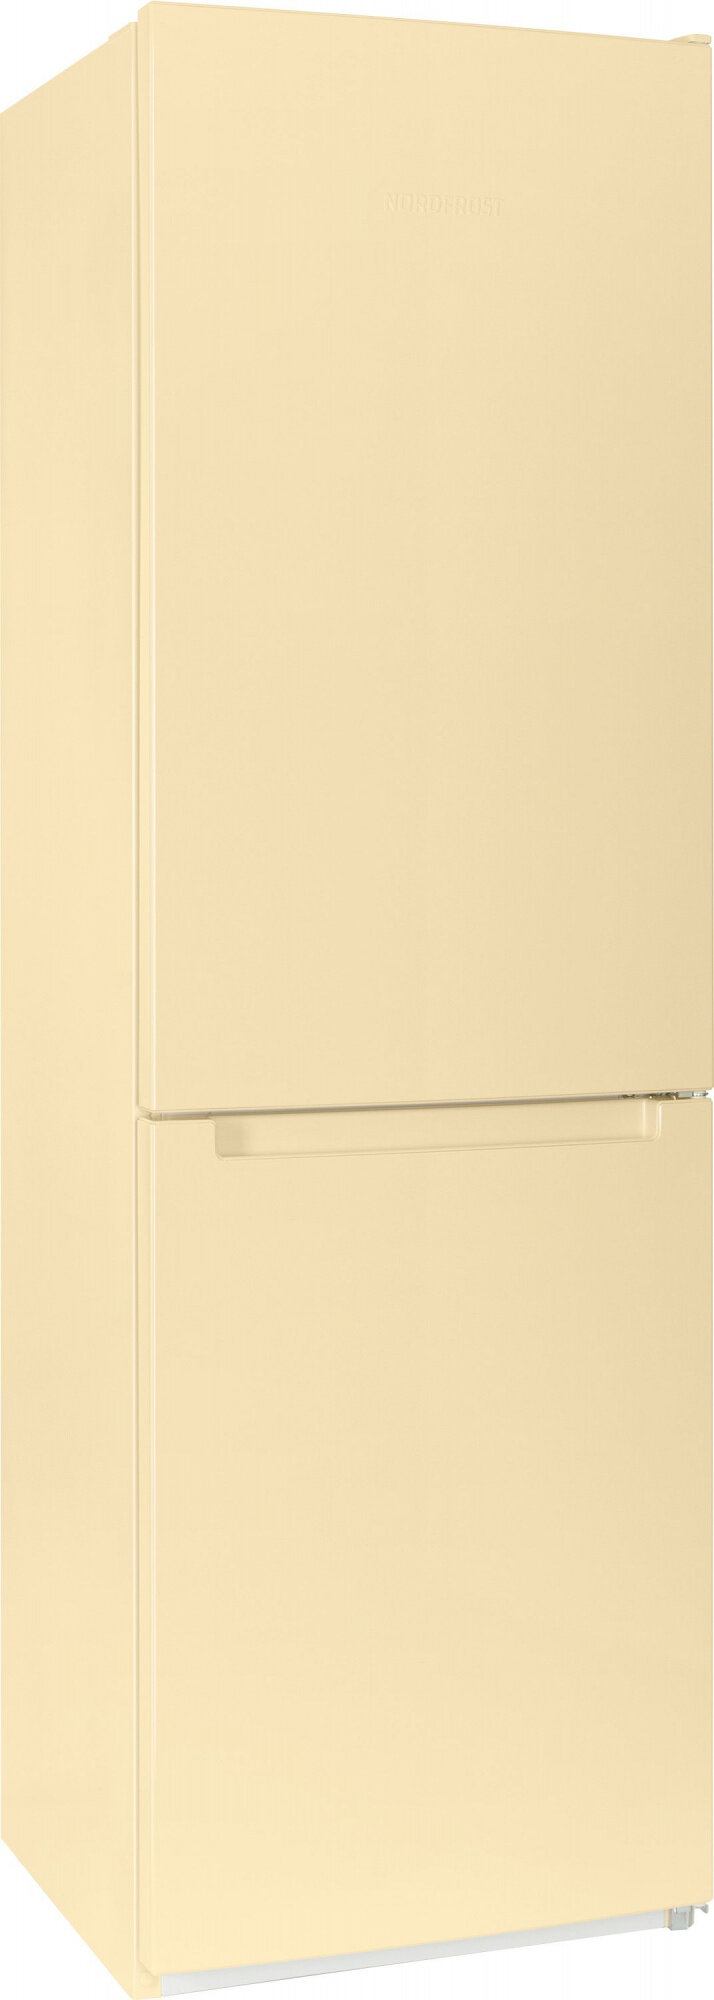 NORDFROST Холодильник Nordfrost NRB 152 E бежевый (двухкамерный)